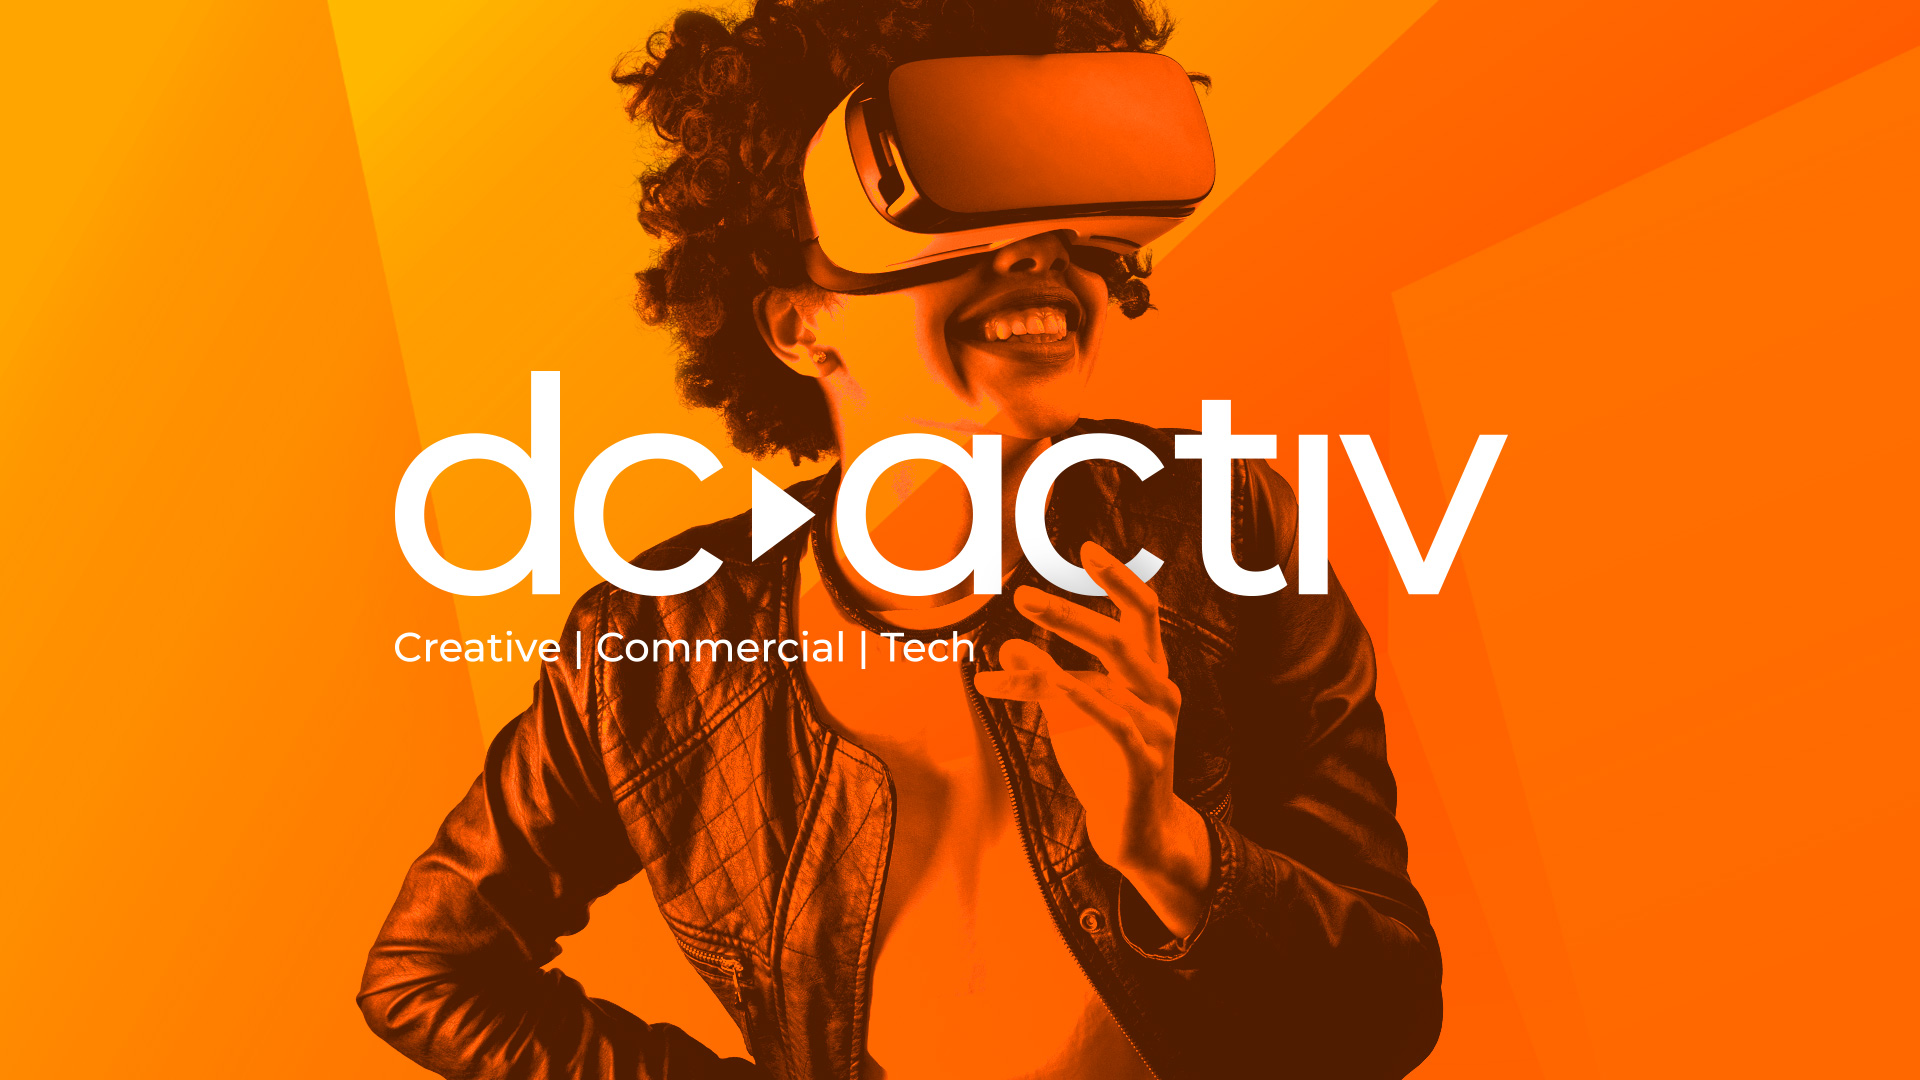 dc-activ - Creative tech for brands